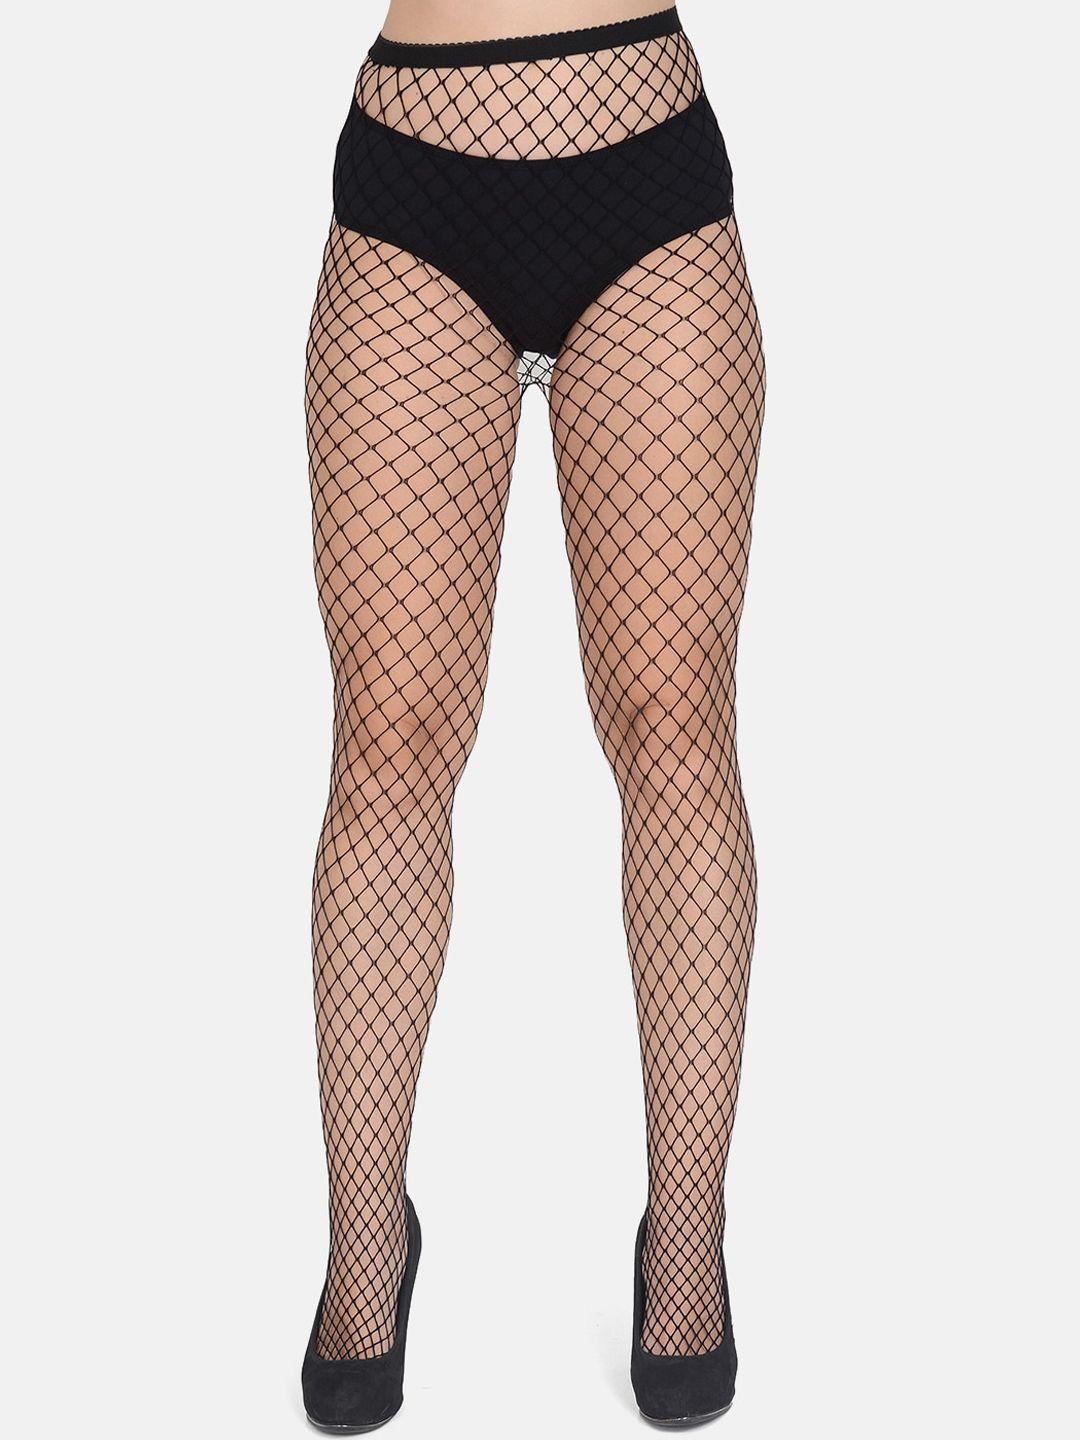 mod & shy women black solid fishnet design pantyhose stockings